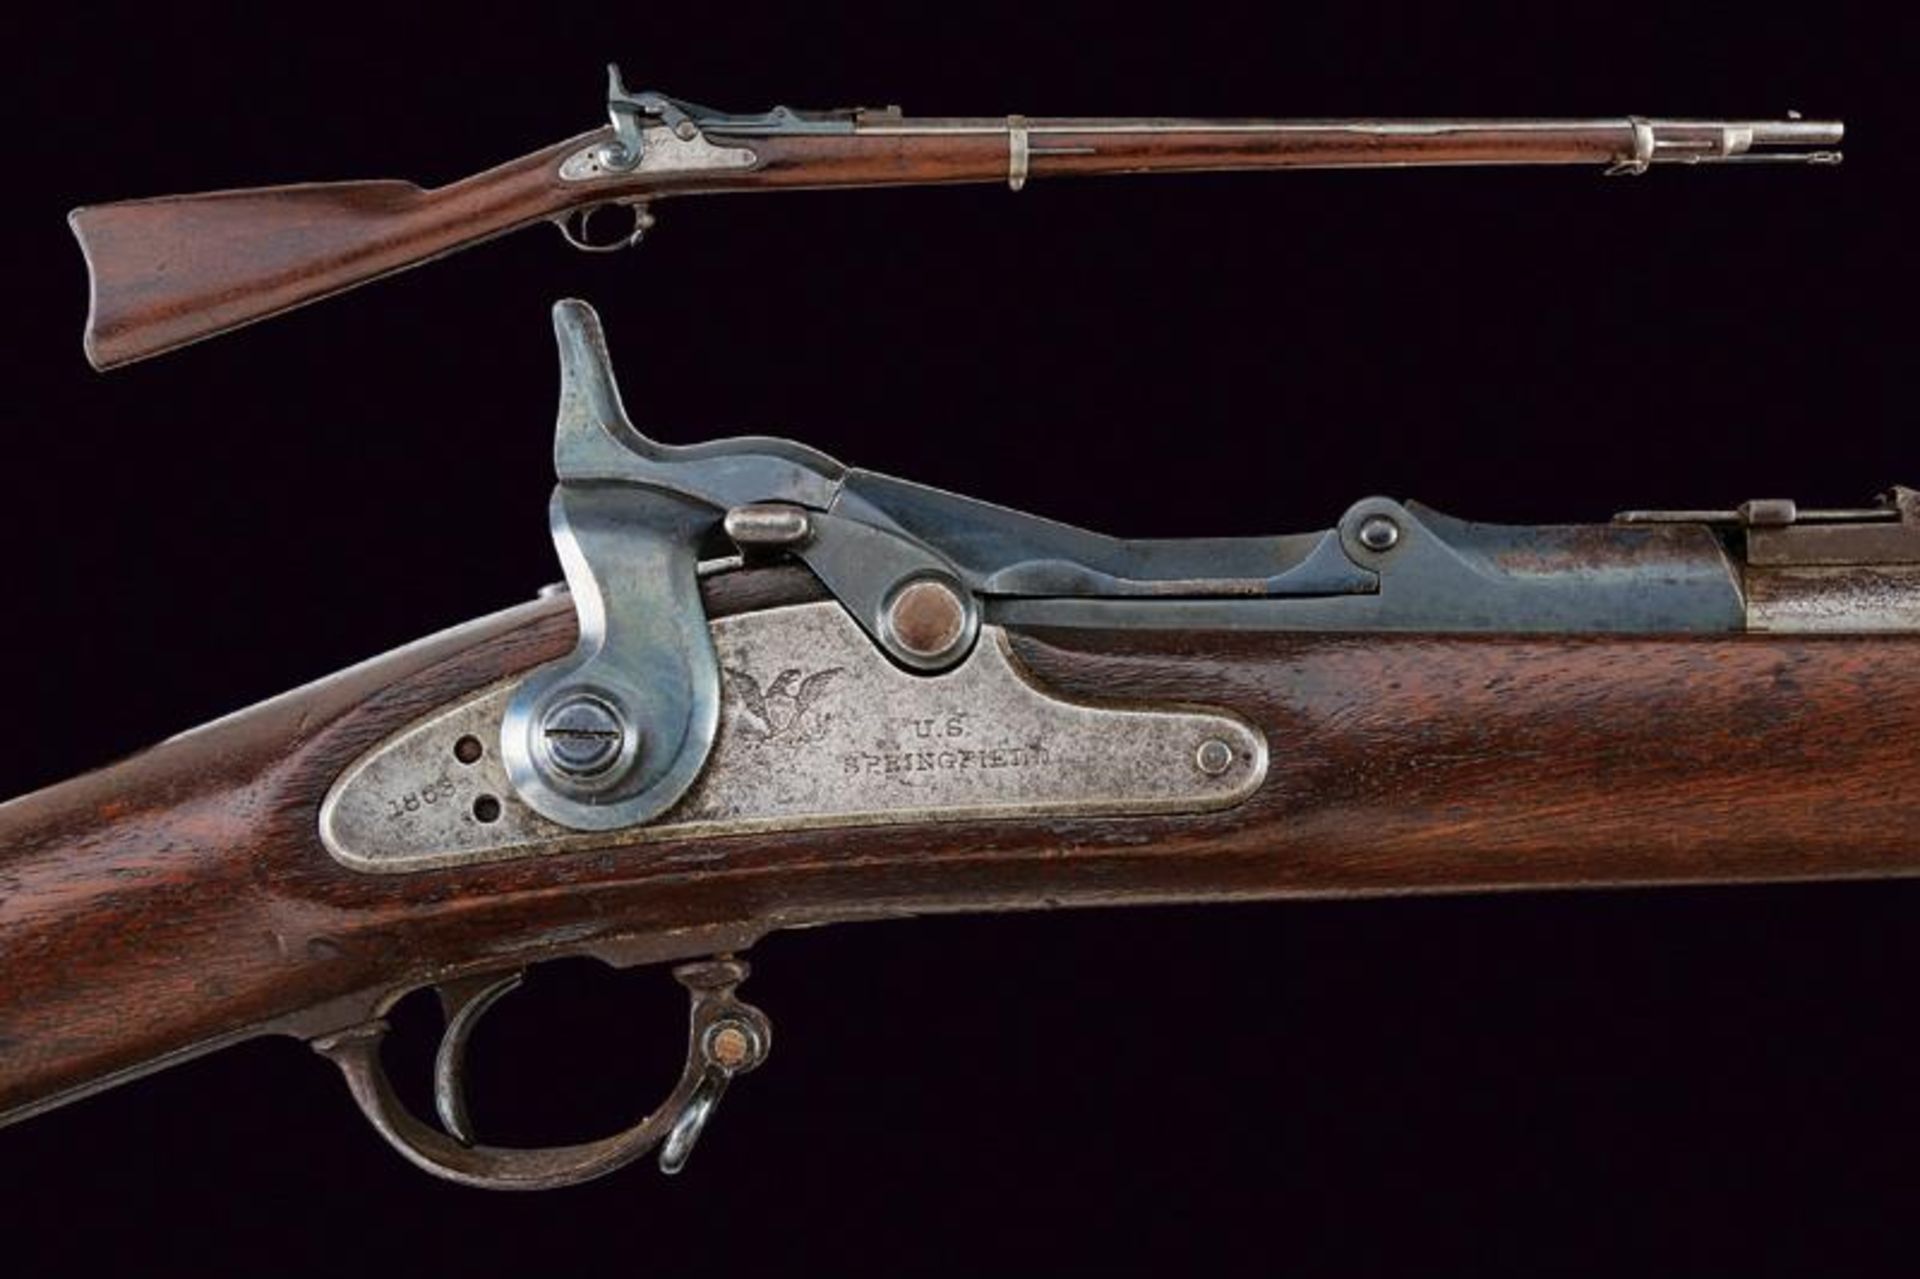 An 1870 model Trapdoor Springfield rifle